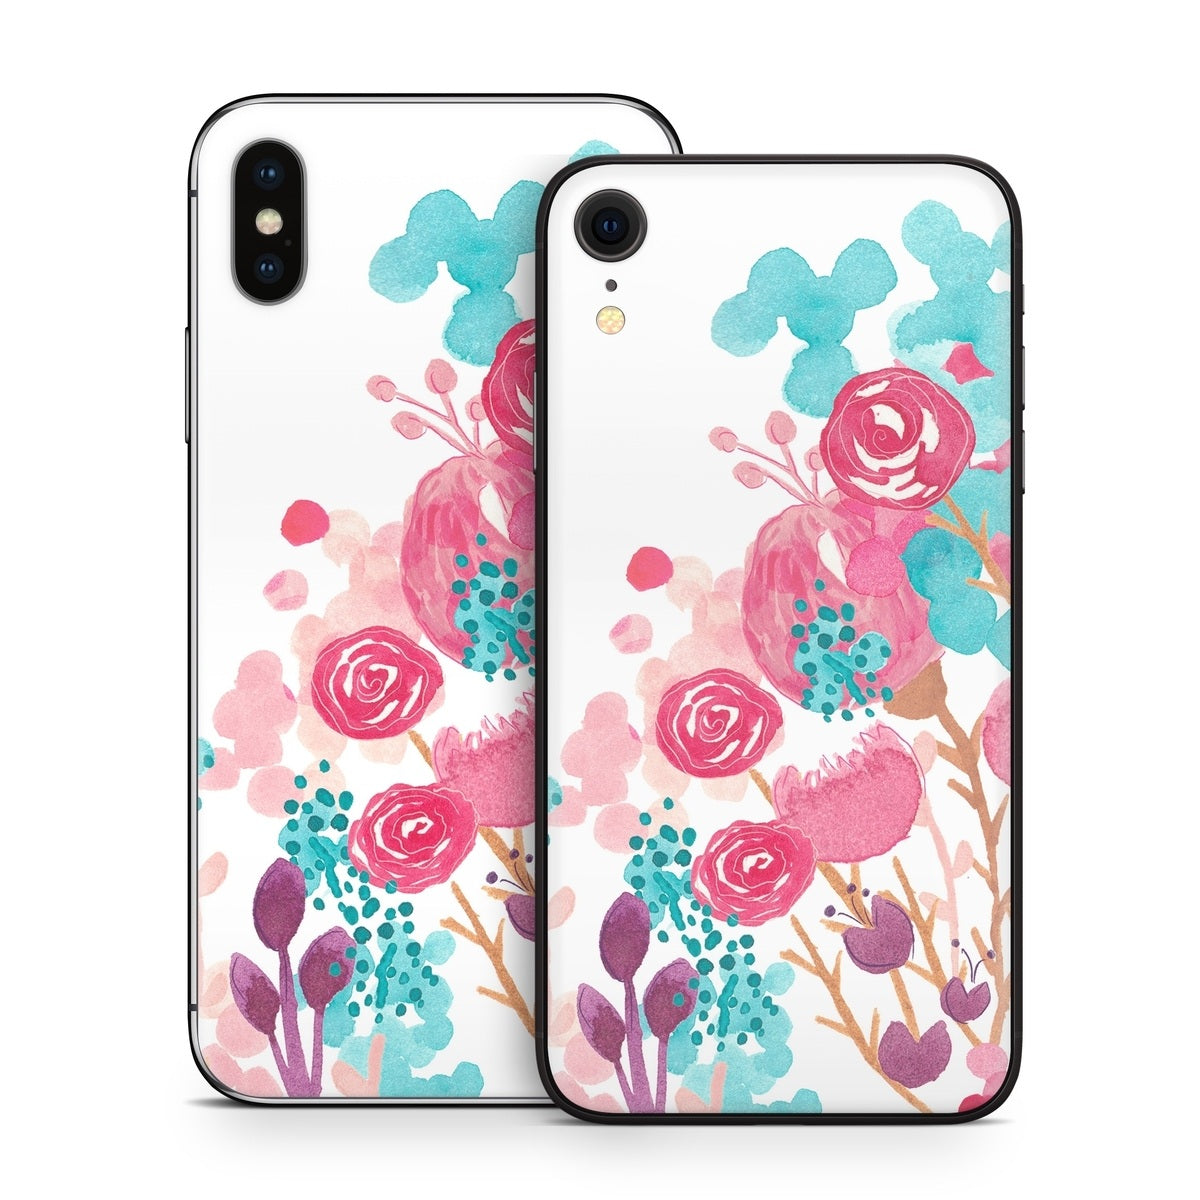 Blush Blossoms - Apple iPhone X Skin